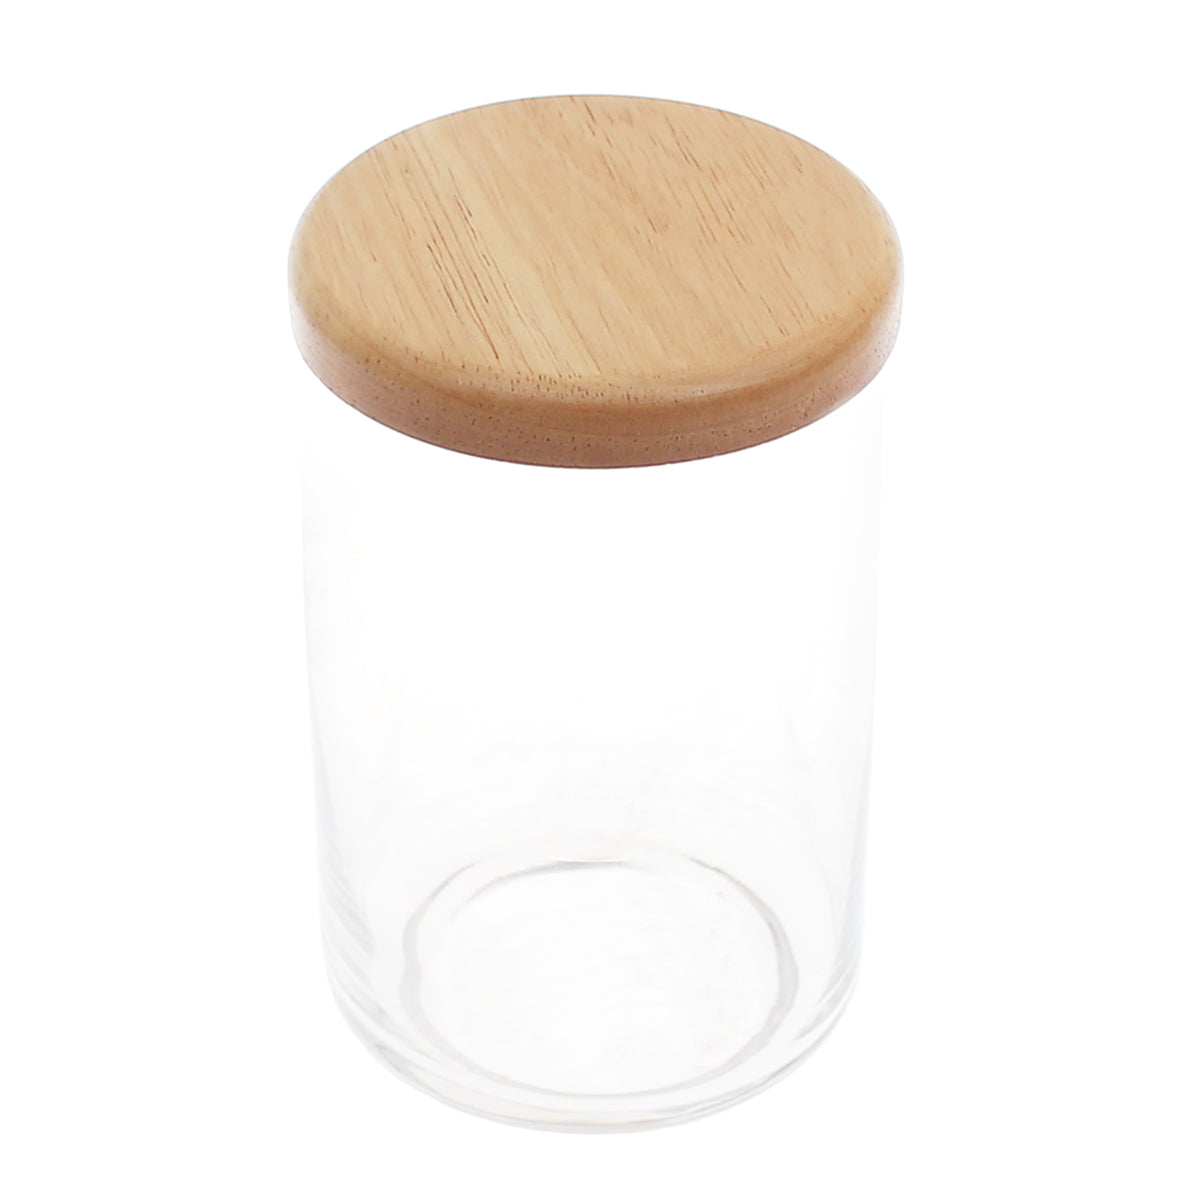 Wooden Jar Lid 1 pcs.750 ml.2526 WOOD